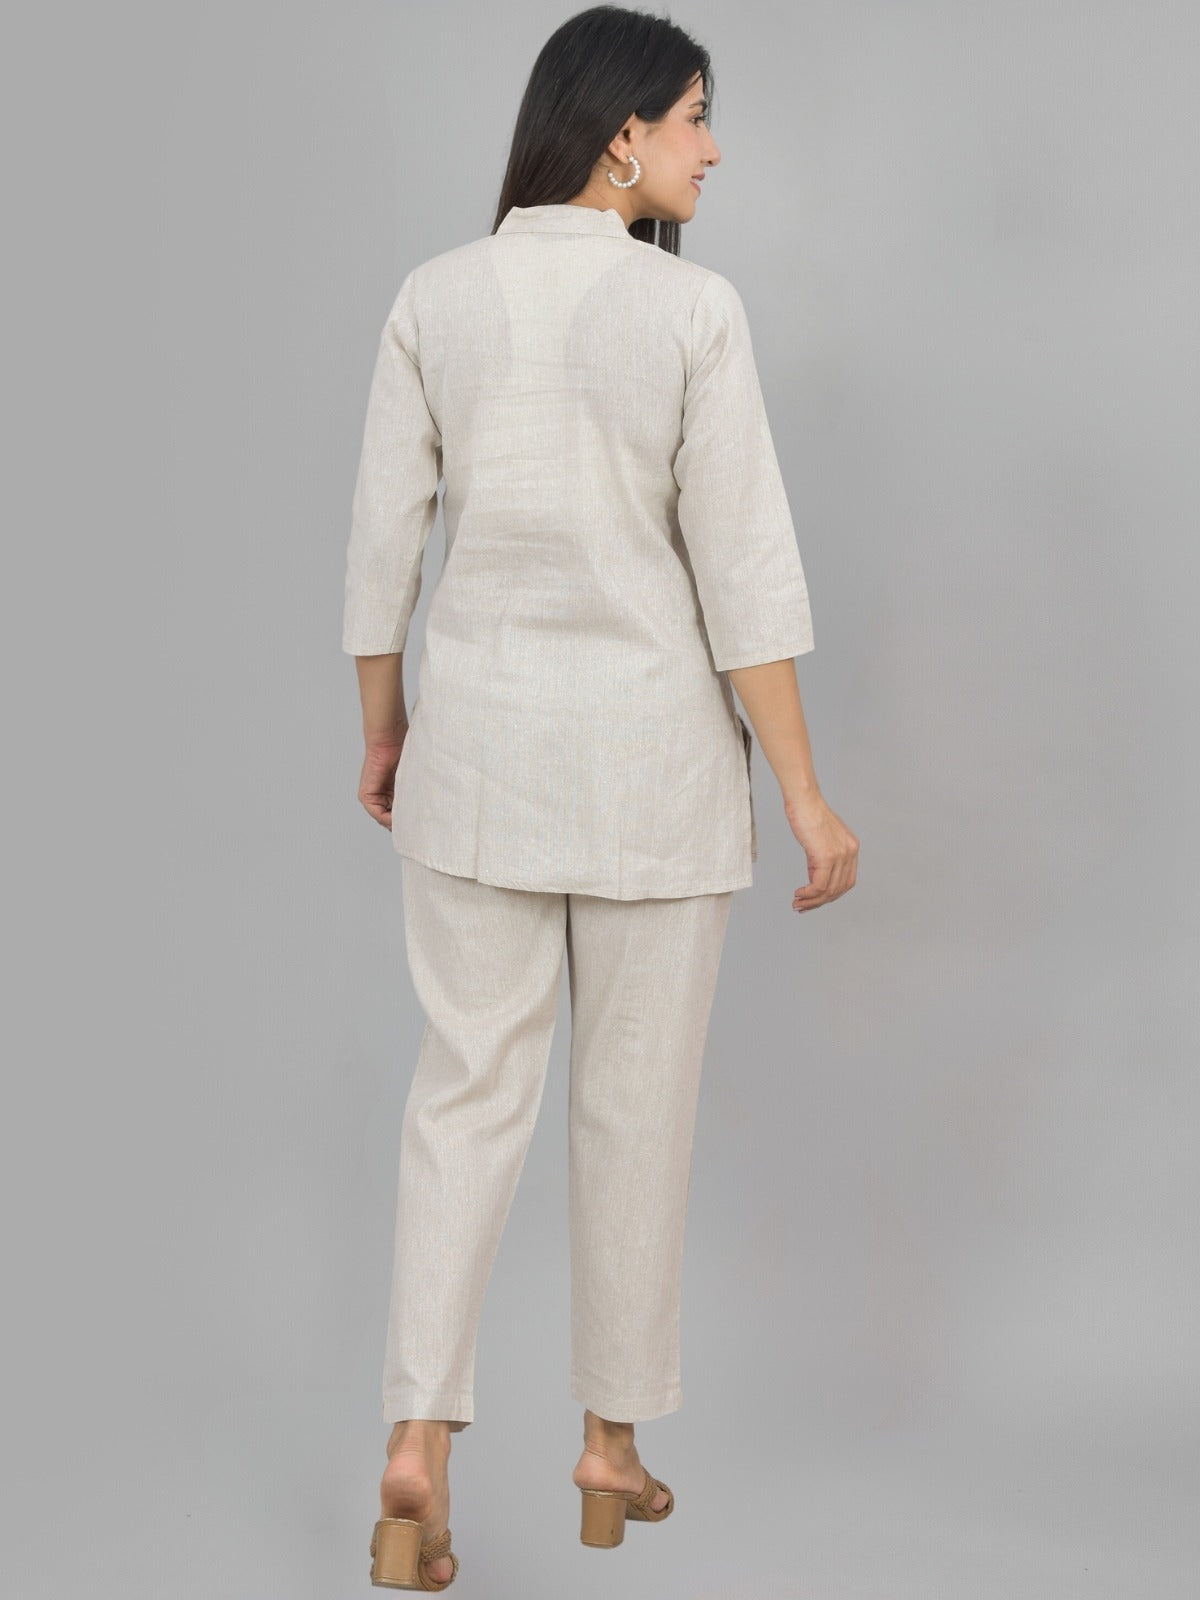 Quaclo Womens Solid Beige Cotton Top-Pyjama Co-Ords Set